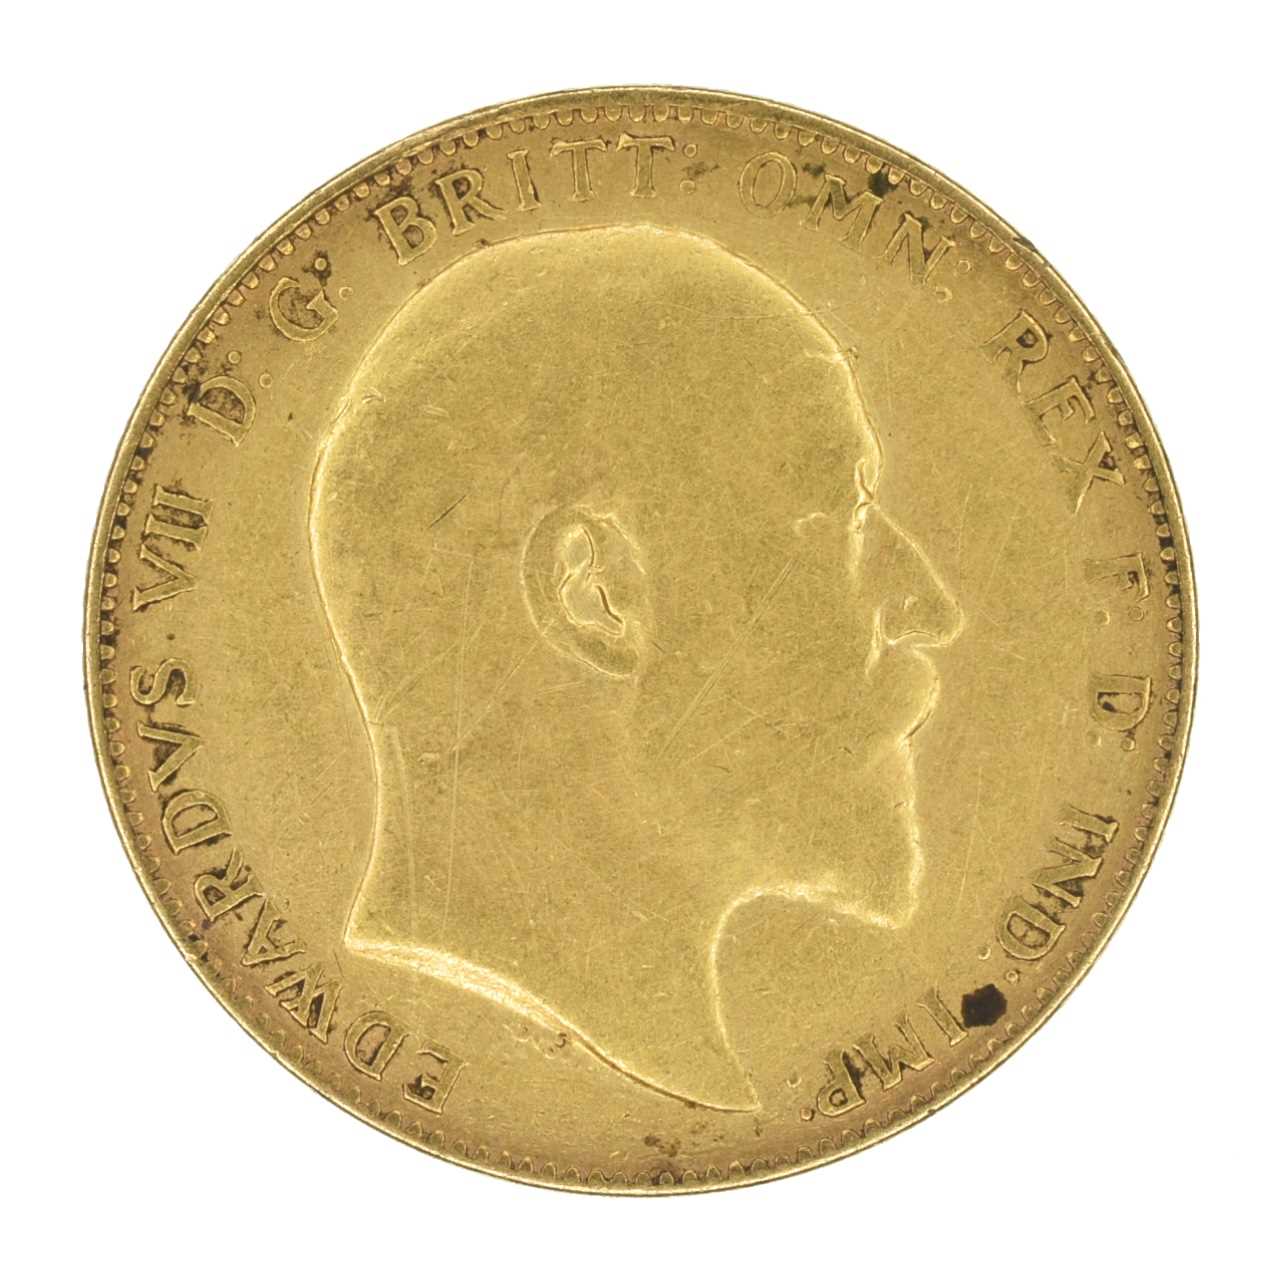 Lot 157 - King Edward VII, Sovereign, 1909, London Mint.